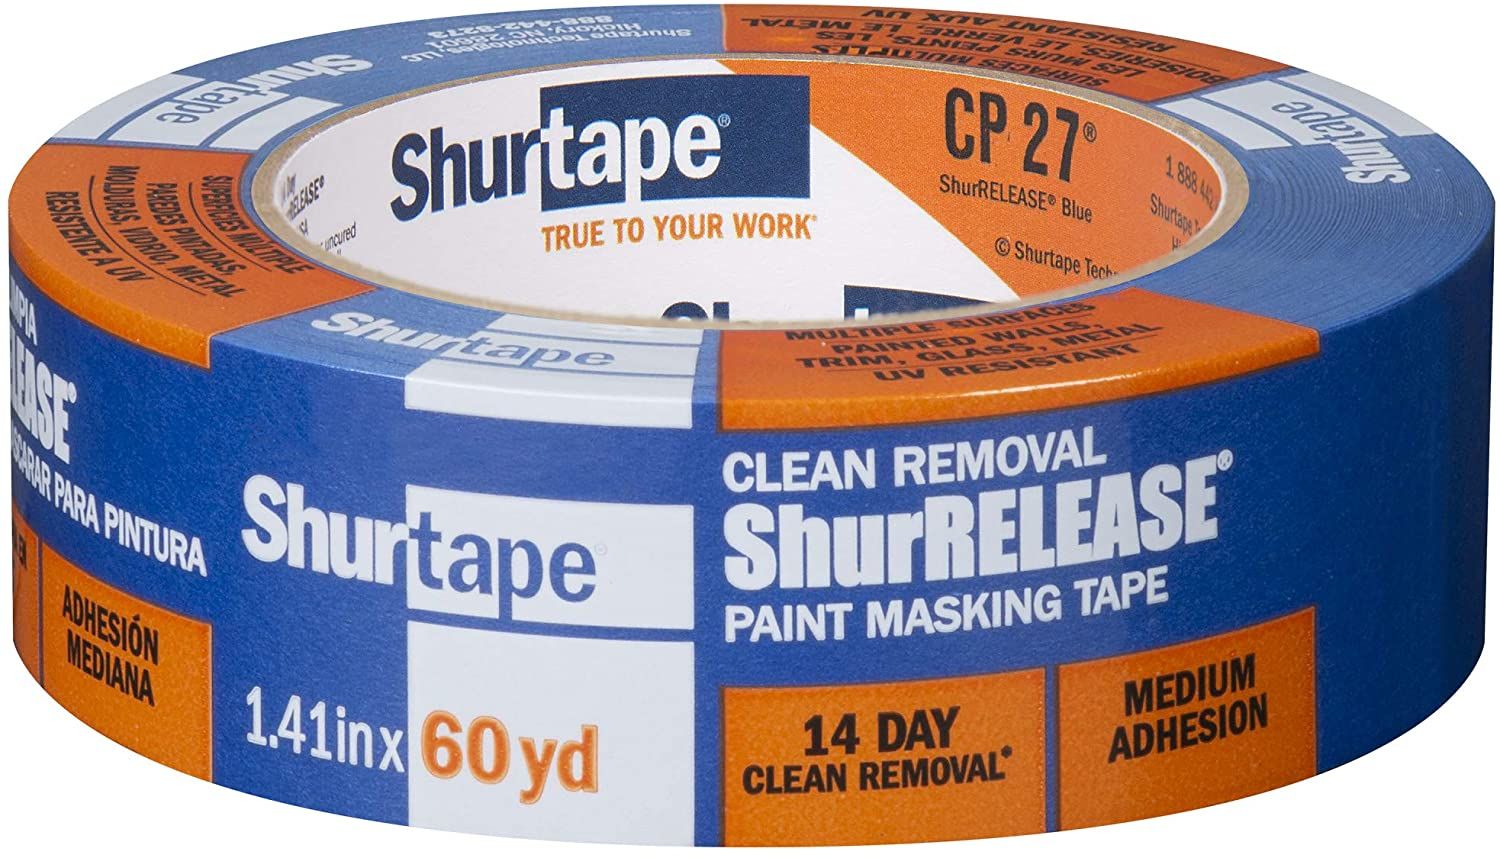 Shurtape ShurRELEASE Paint Masking Tape